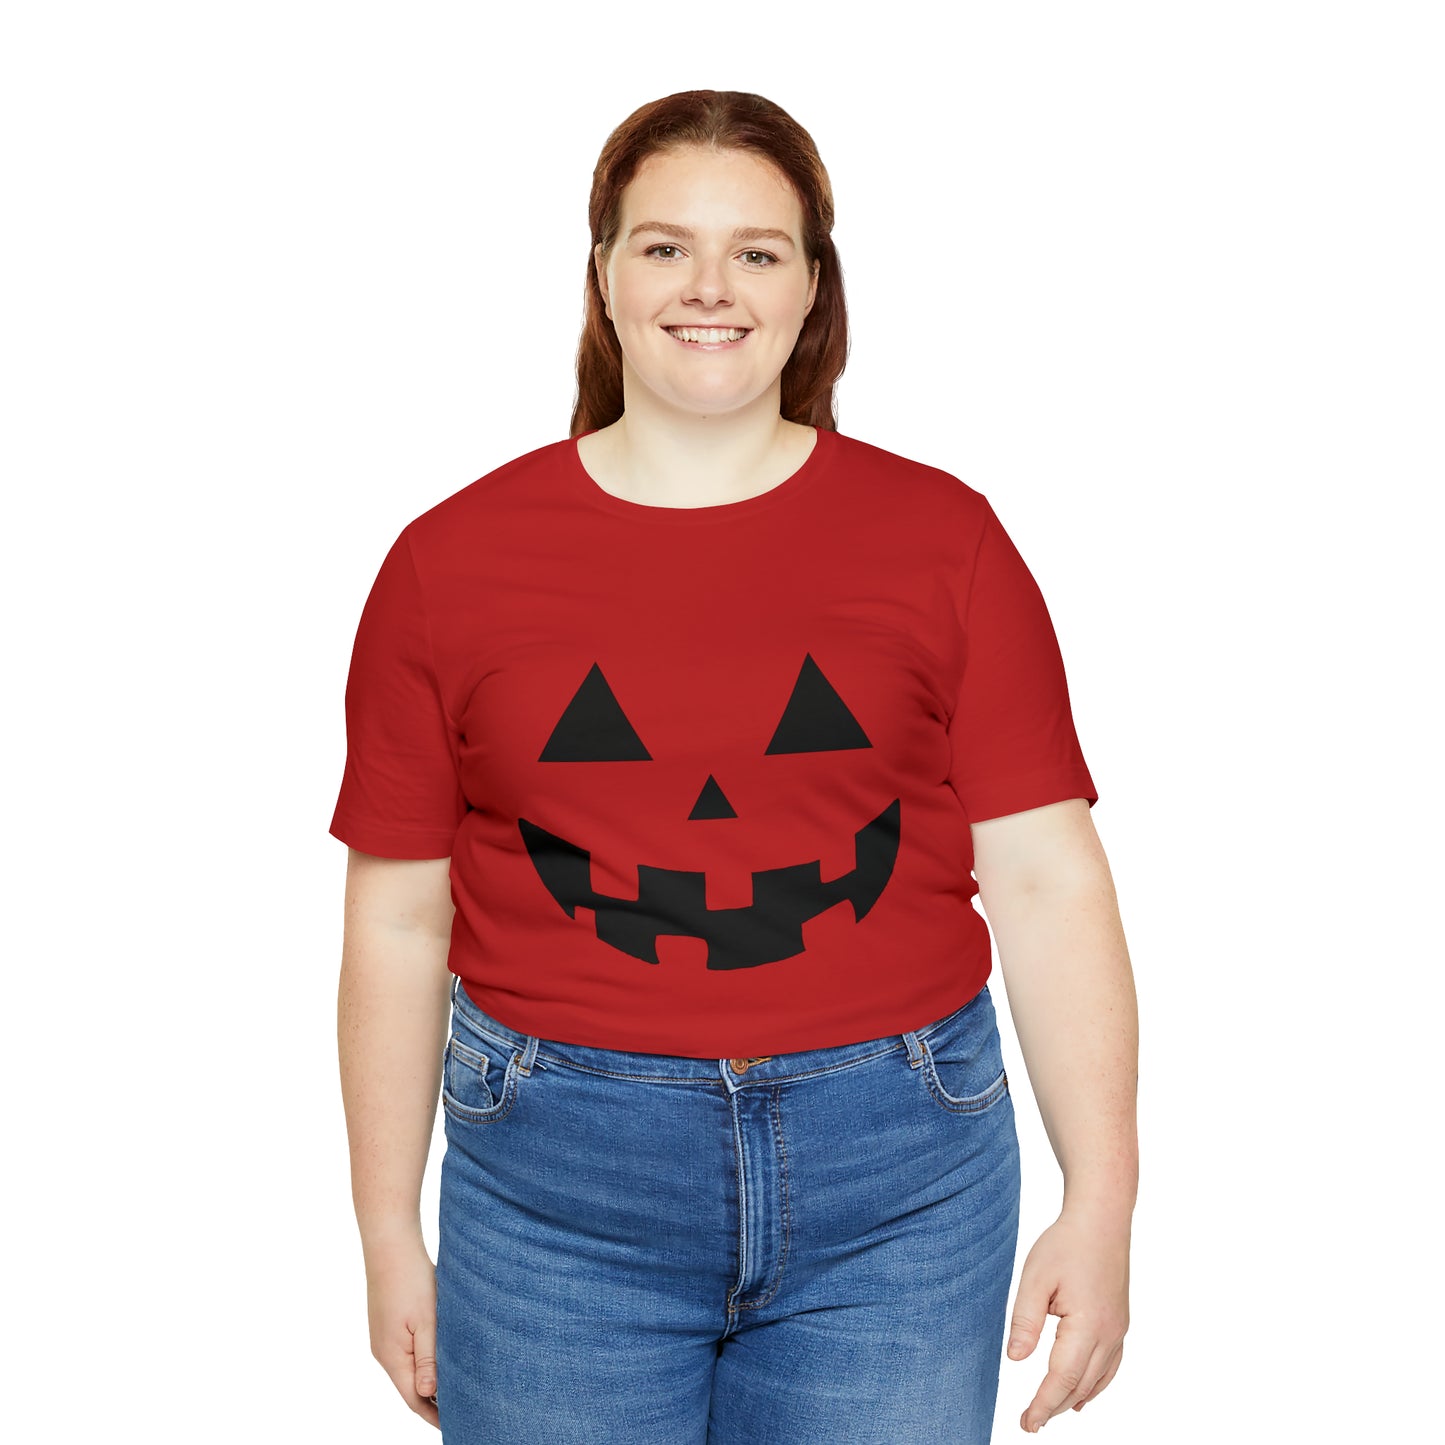 Halloween Pumpkin Faces Scary Faces, Pumpkin Silhouette, Vintage Shirt Halloween Shirt Pumpkin Face Halloween Costume